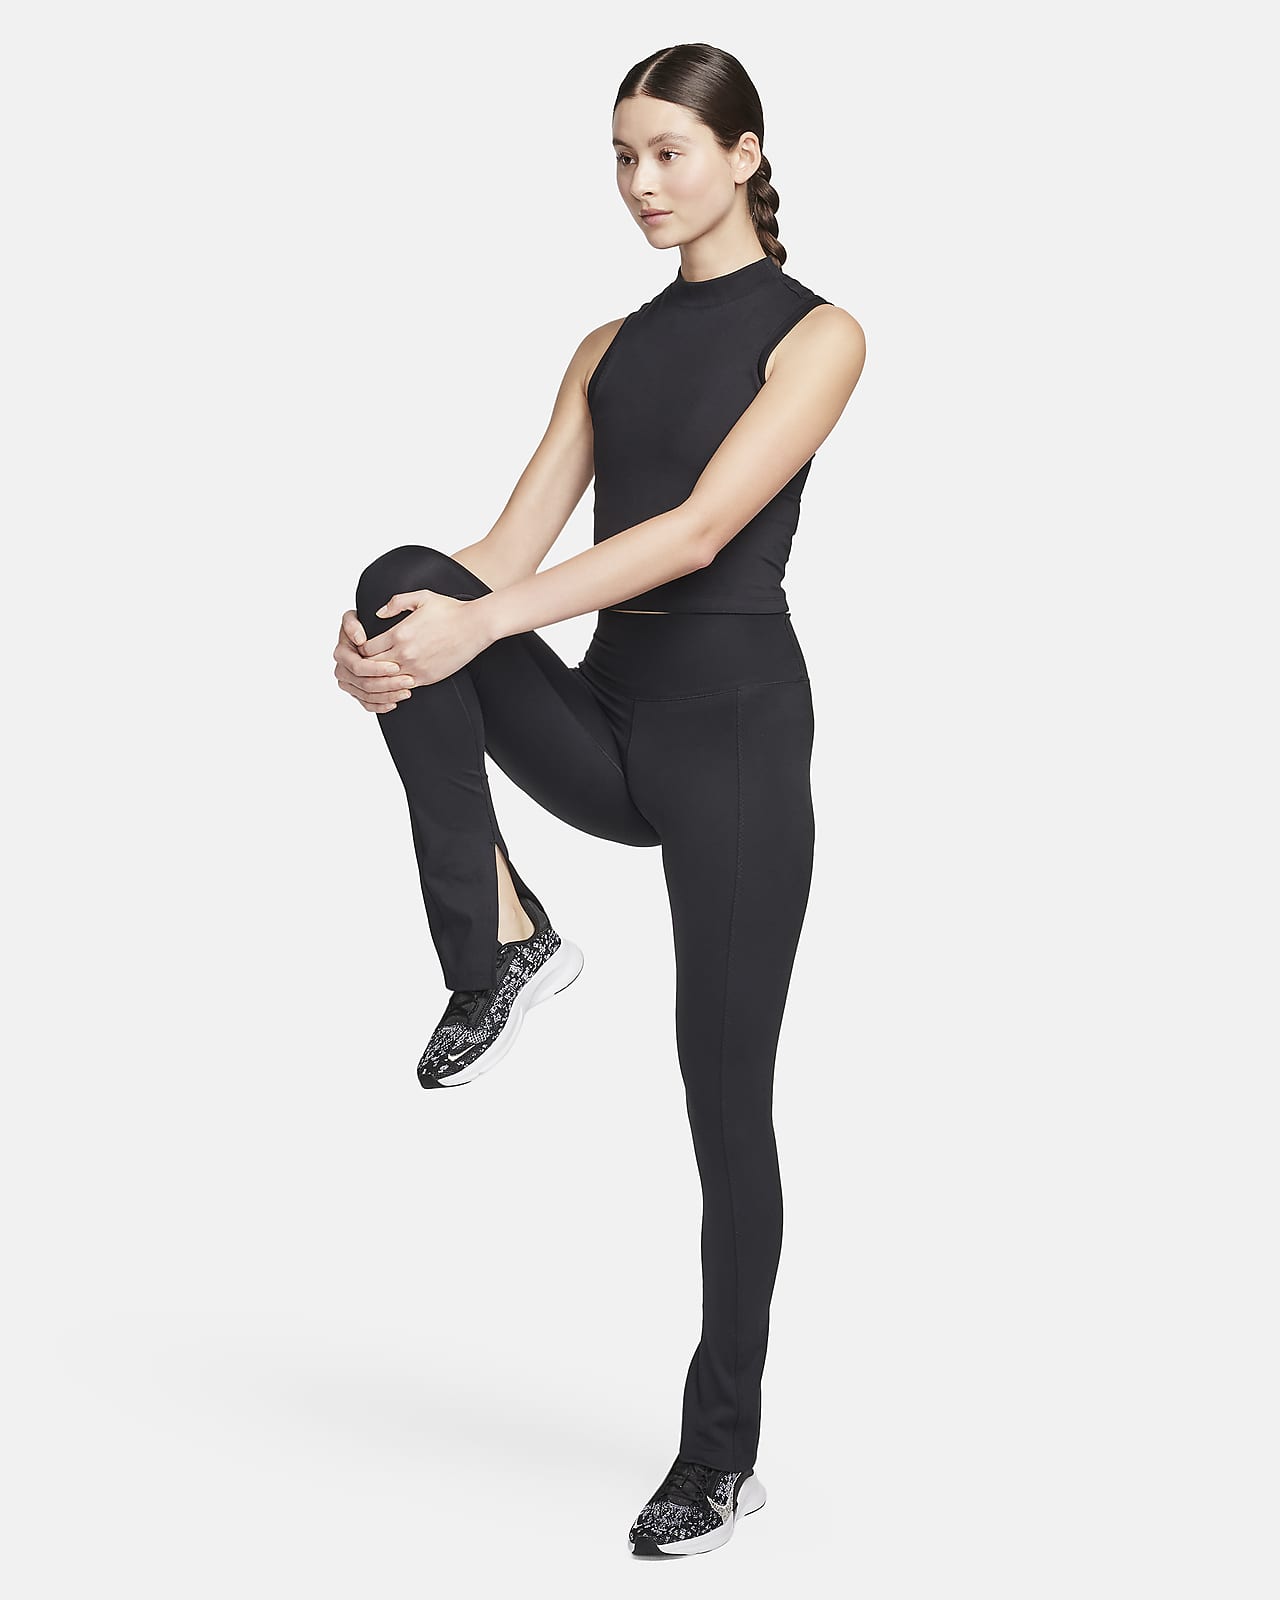 Nike One Leggings de talle alto y longitud completa con dobladillo